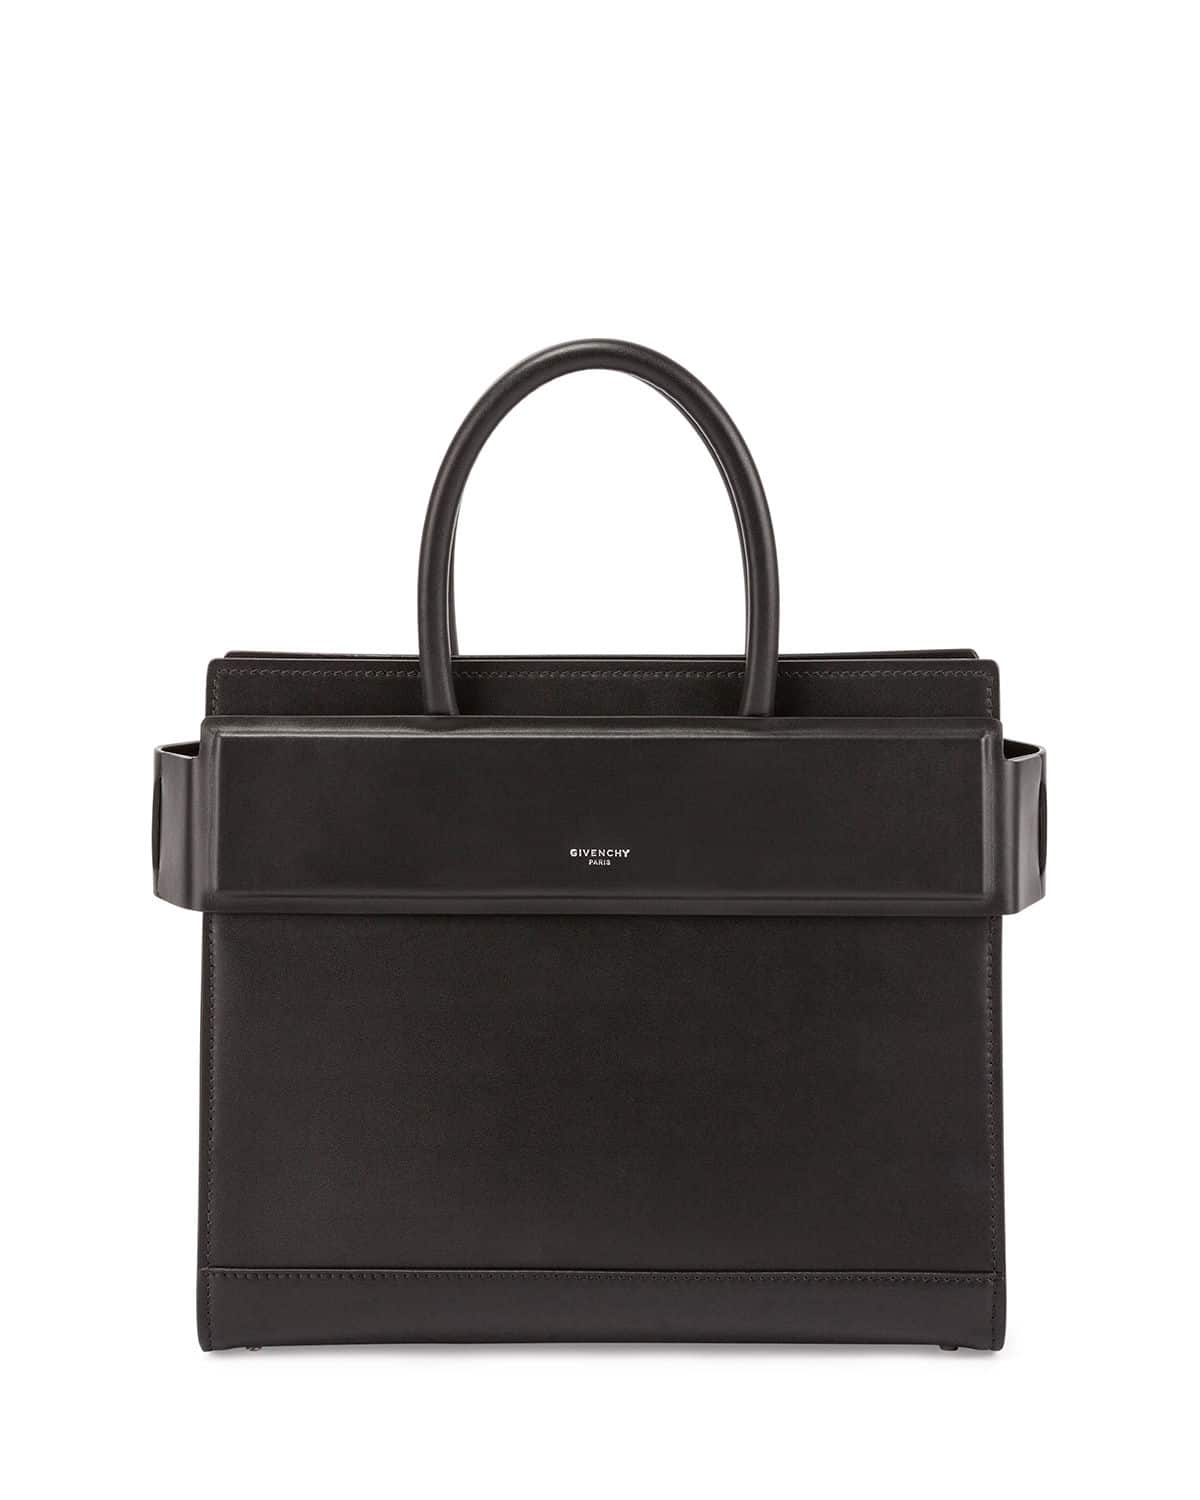 Givenchy Black Horizon Small Satchel Bag